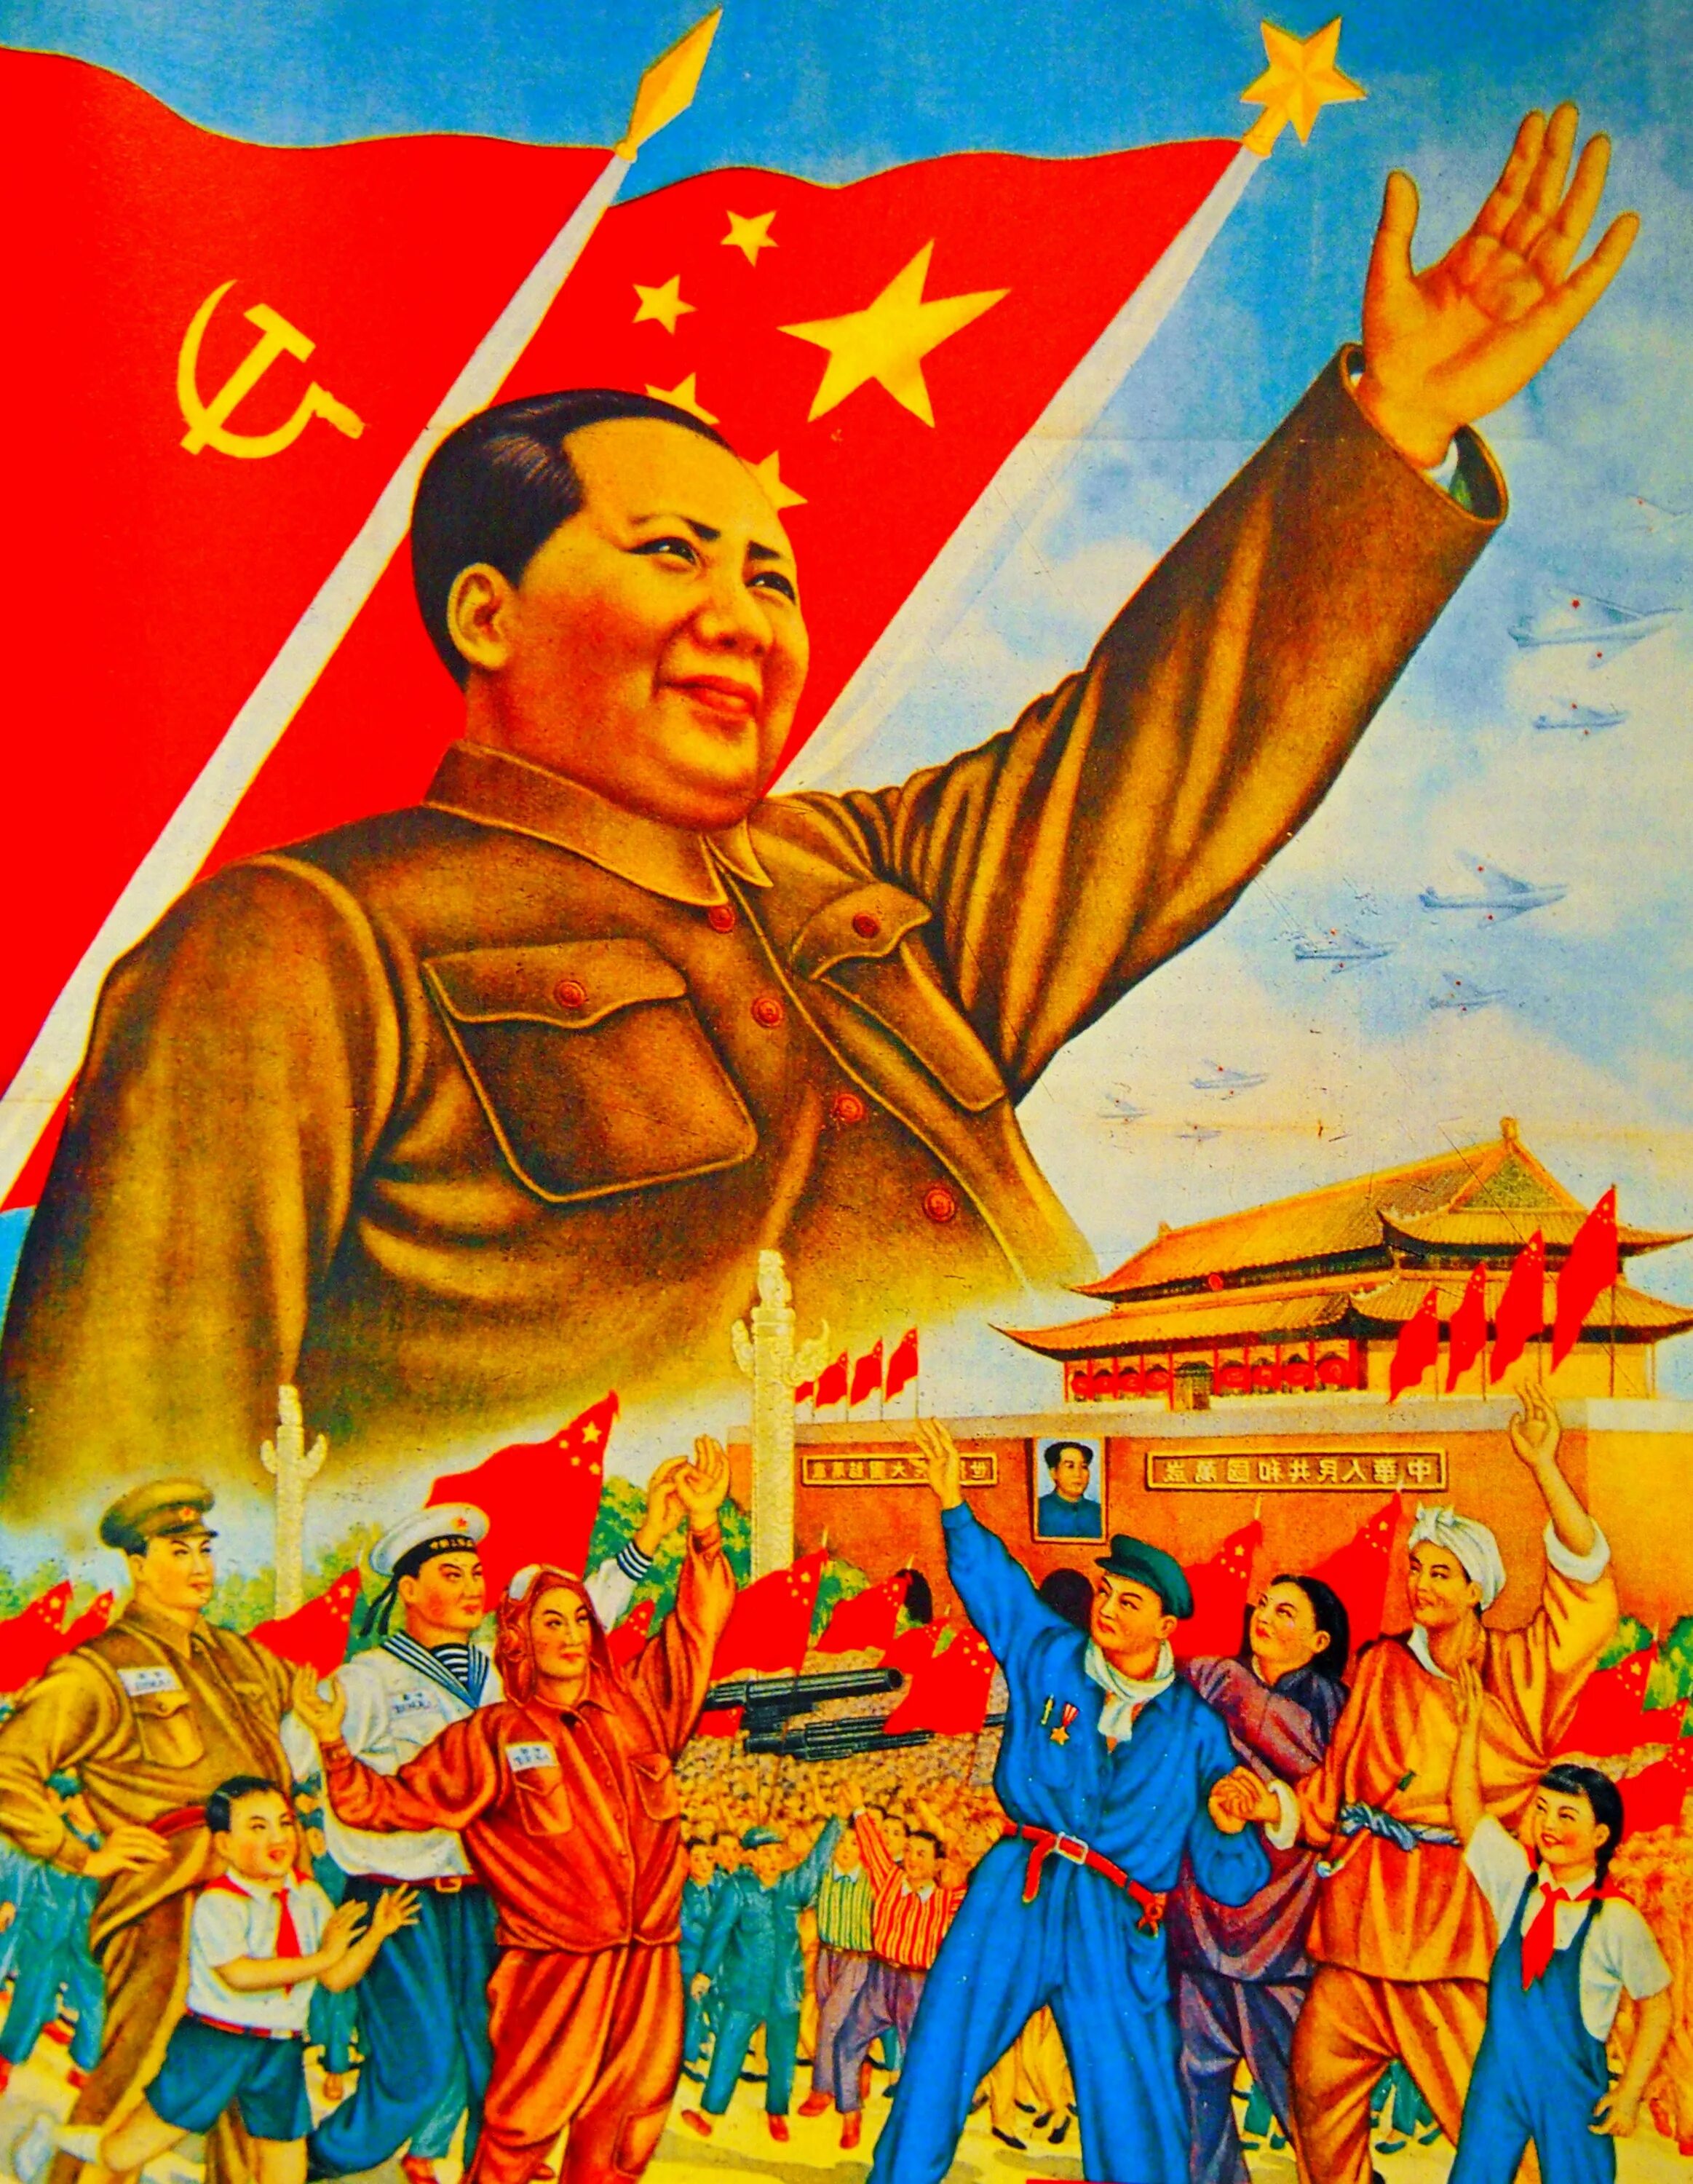 Китайские великие люди. Китайские плакаты Мао Цзэдун. Китайский агитационный плакат эпохи Мао Цзэдуна. Мао Цзэдун пропаганда. КНР Мао Цзэдун.